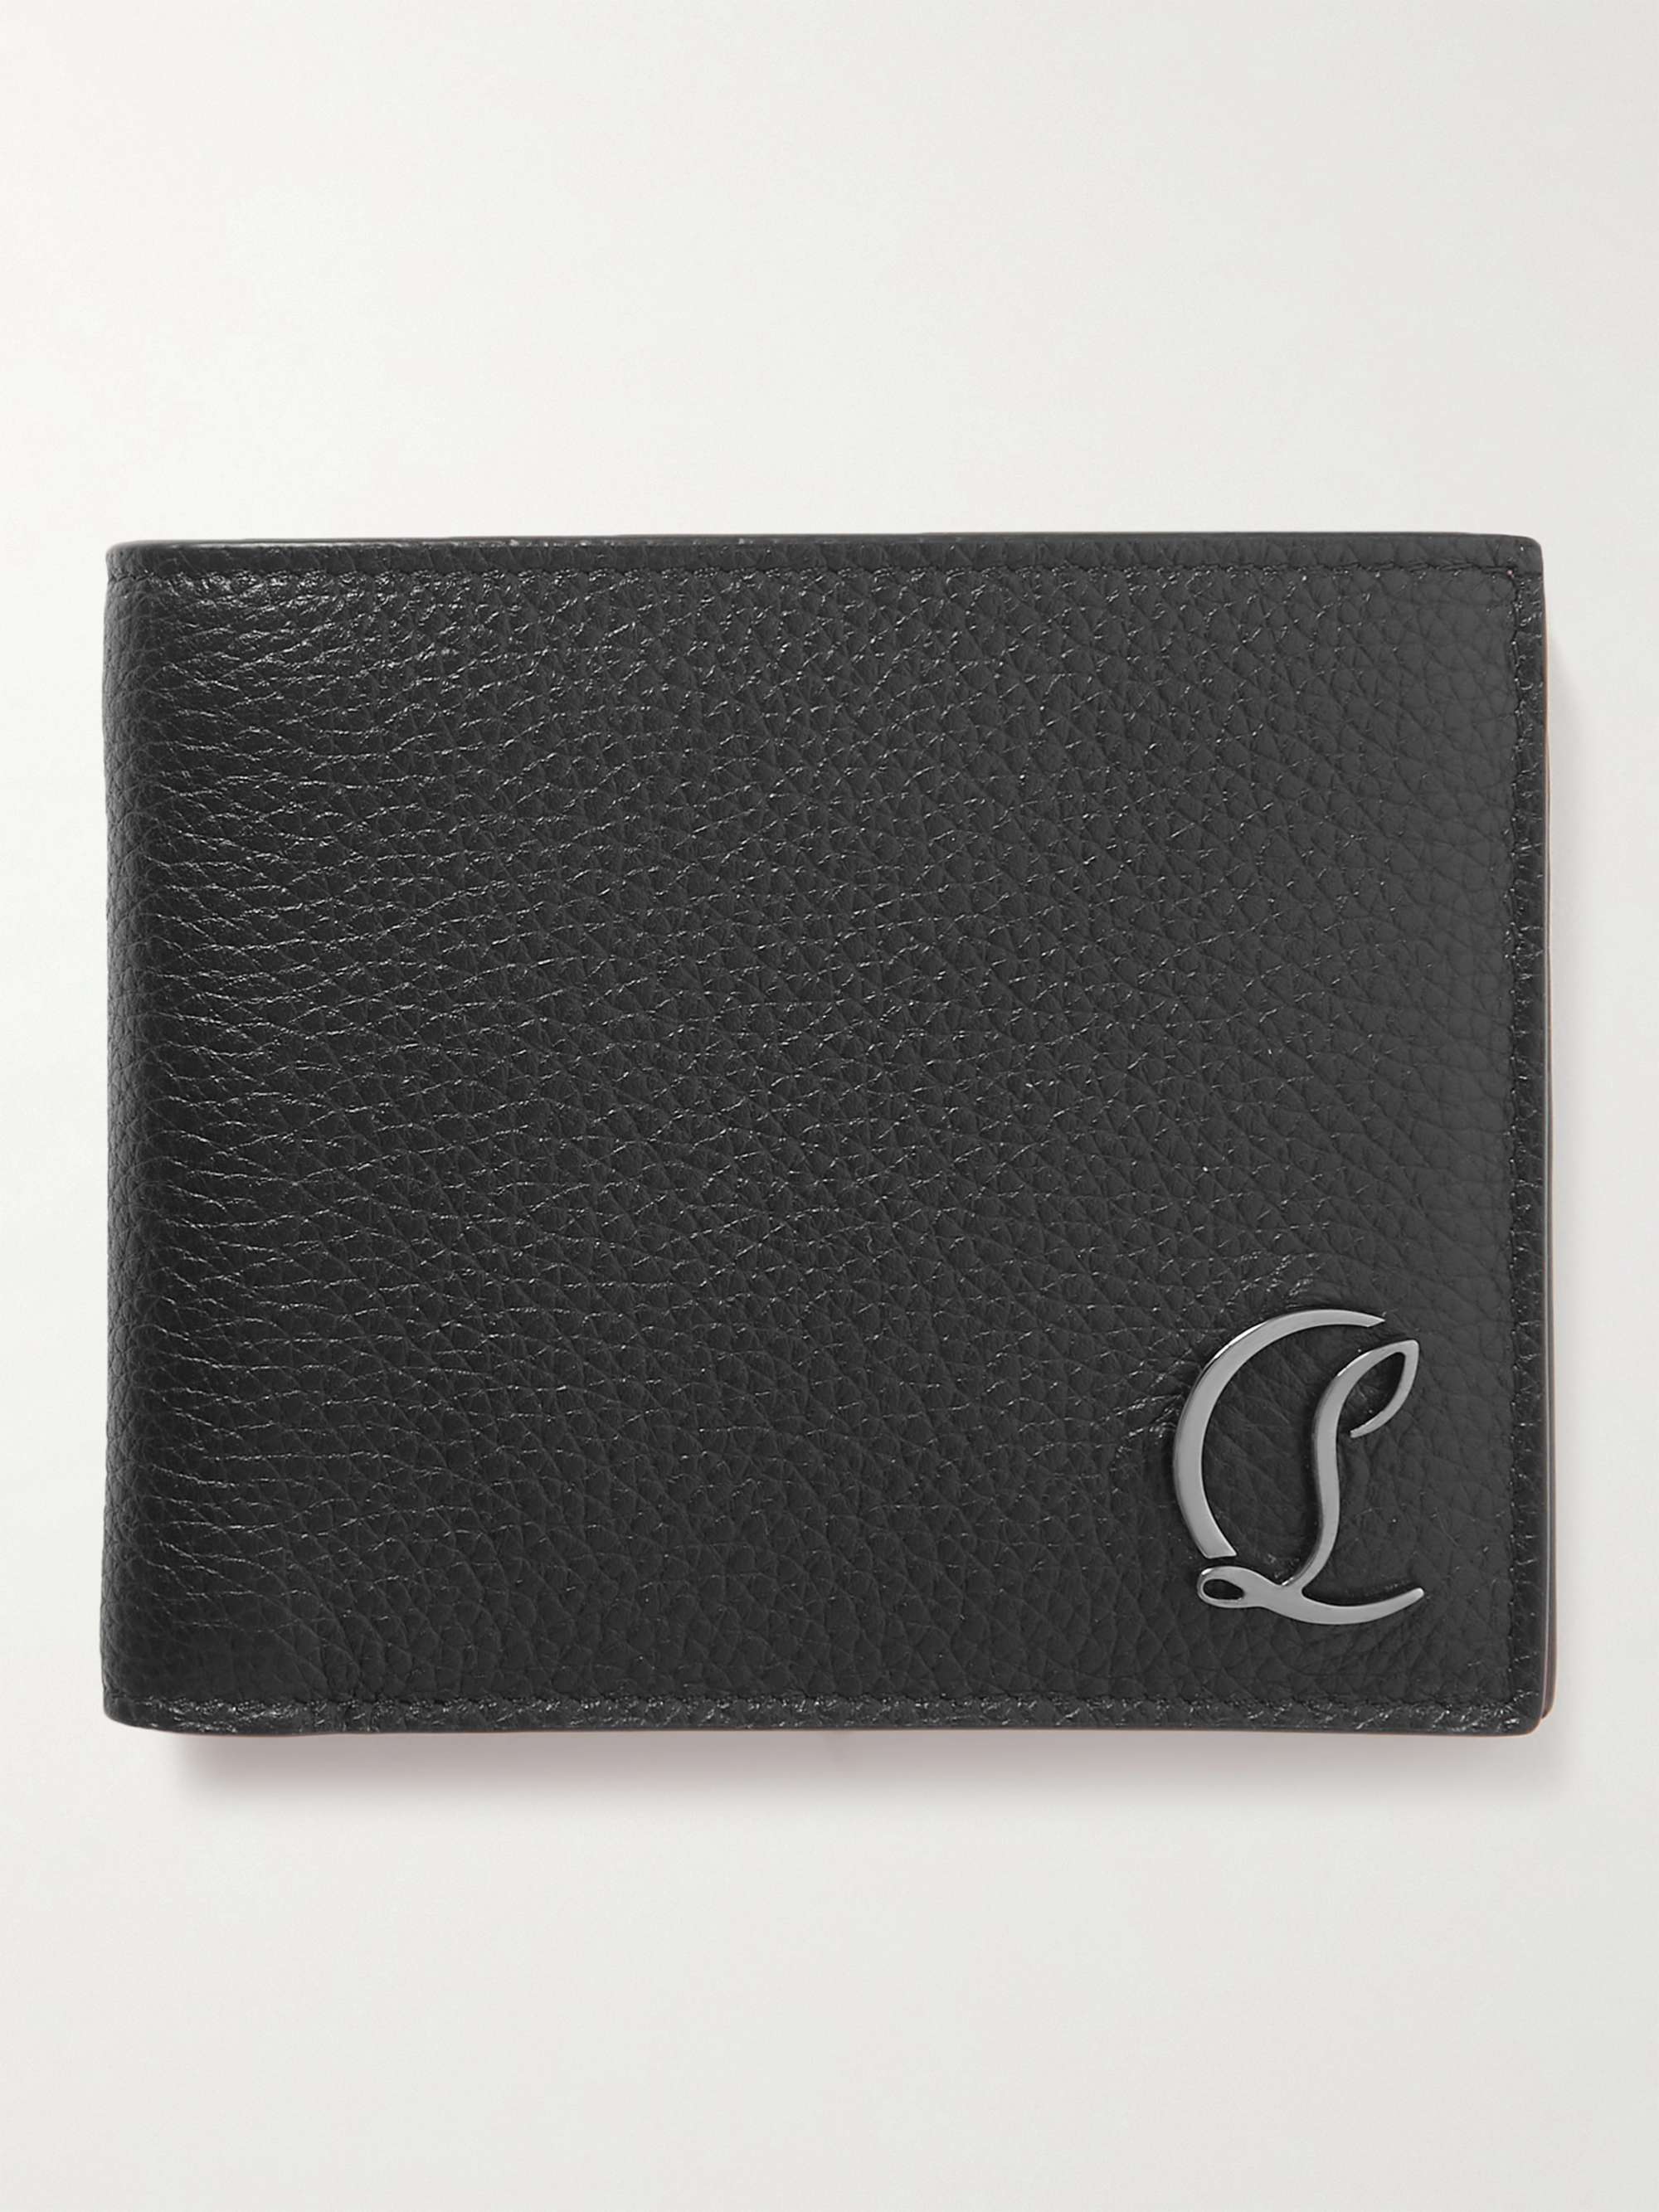 CHRISTIAN LOUBOUTIN Logo-Appliquéd Full-Grain Leather Billfold Wallet